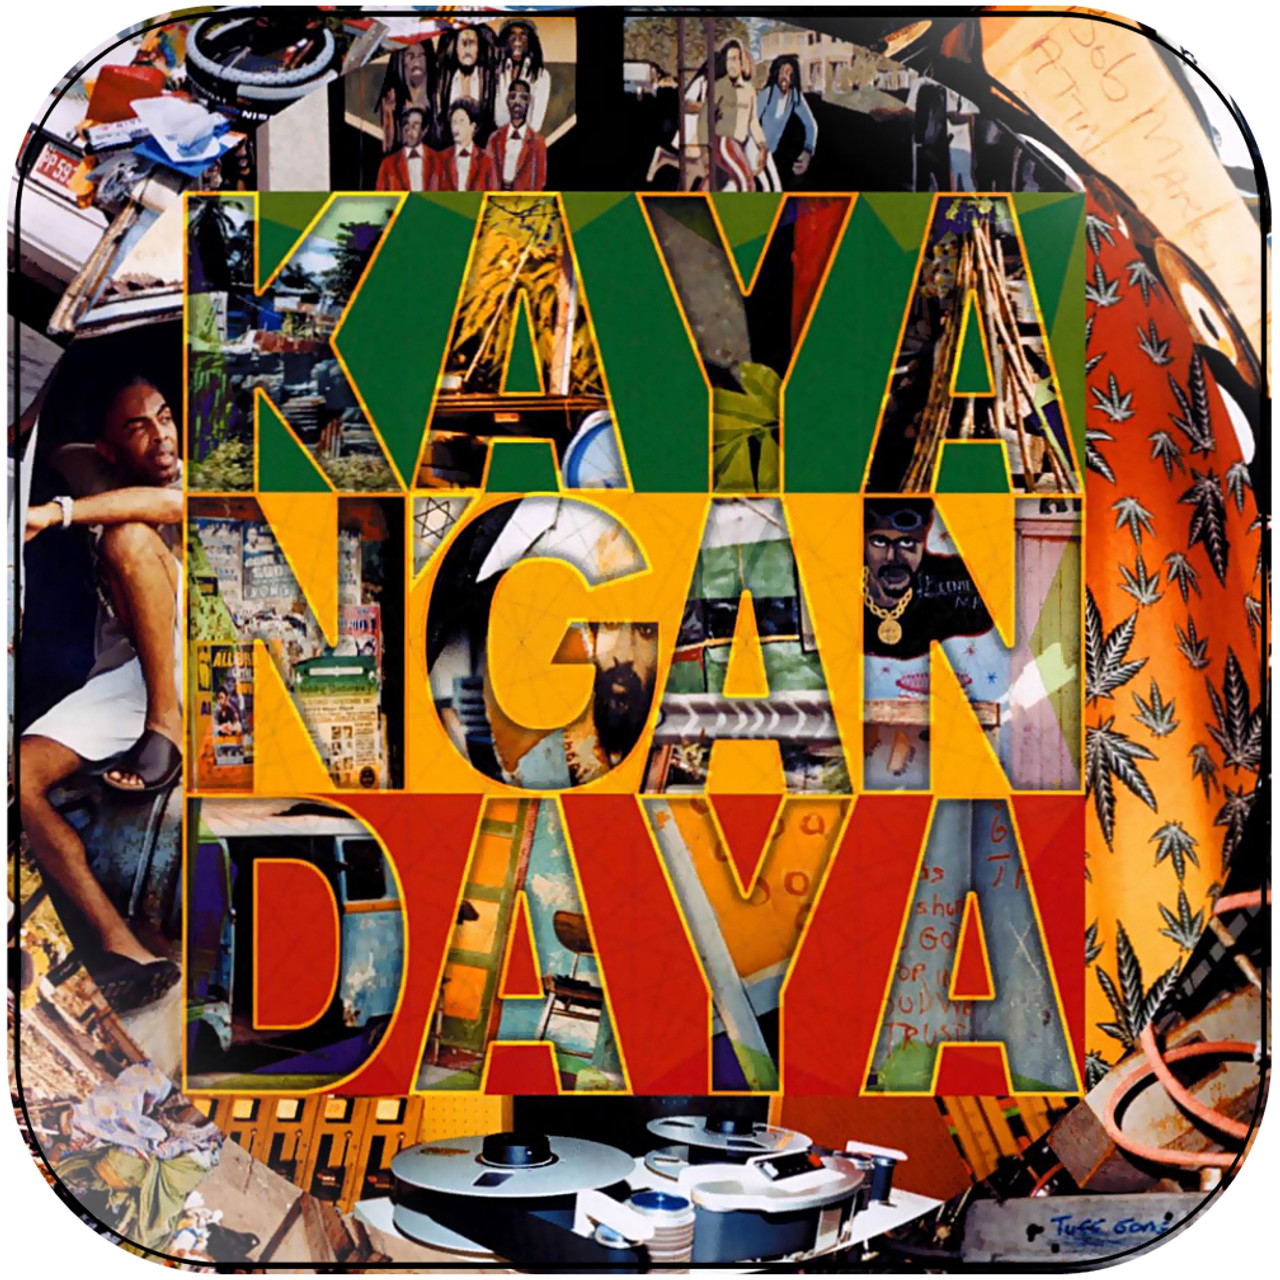 Gilberto Gil Kaya Ngan Daya Album Cover Sticker